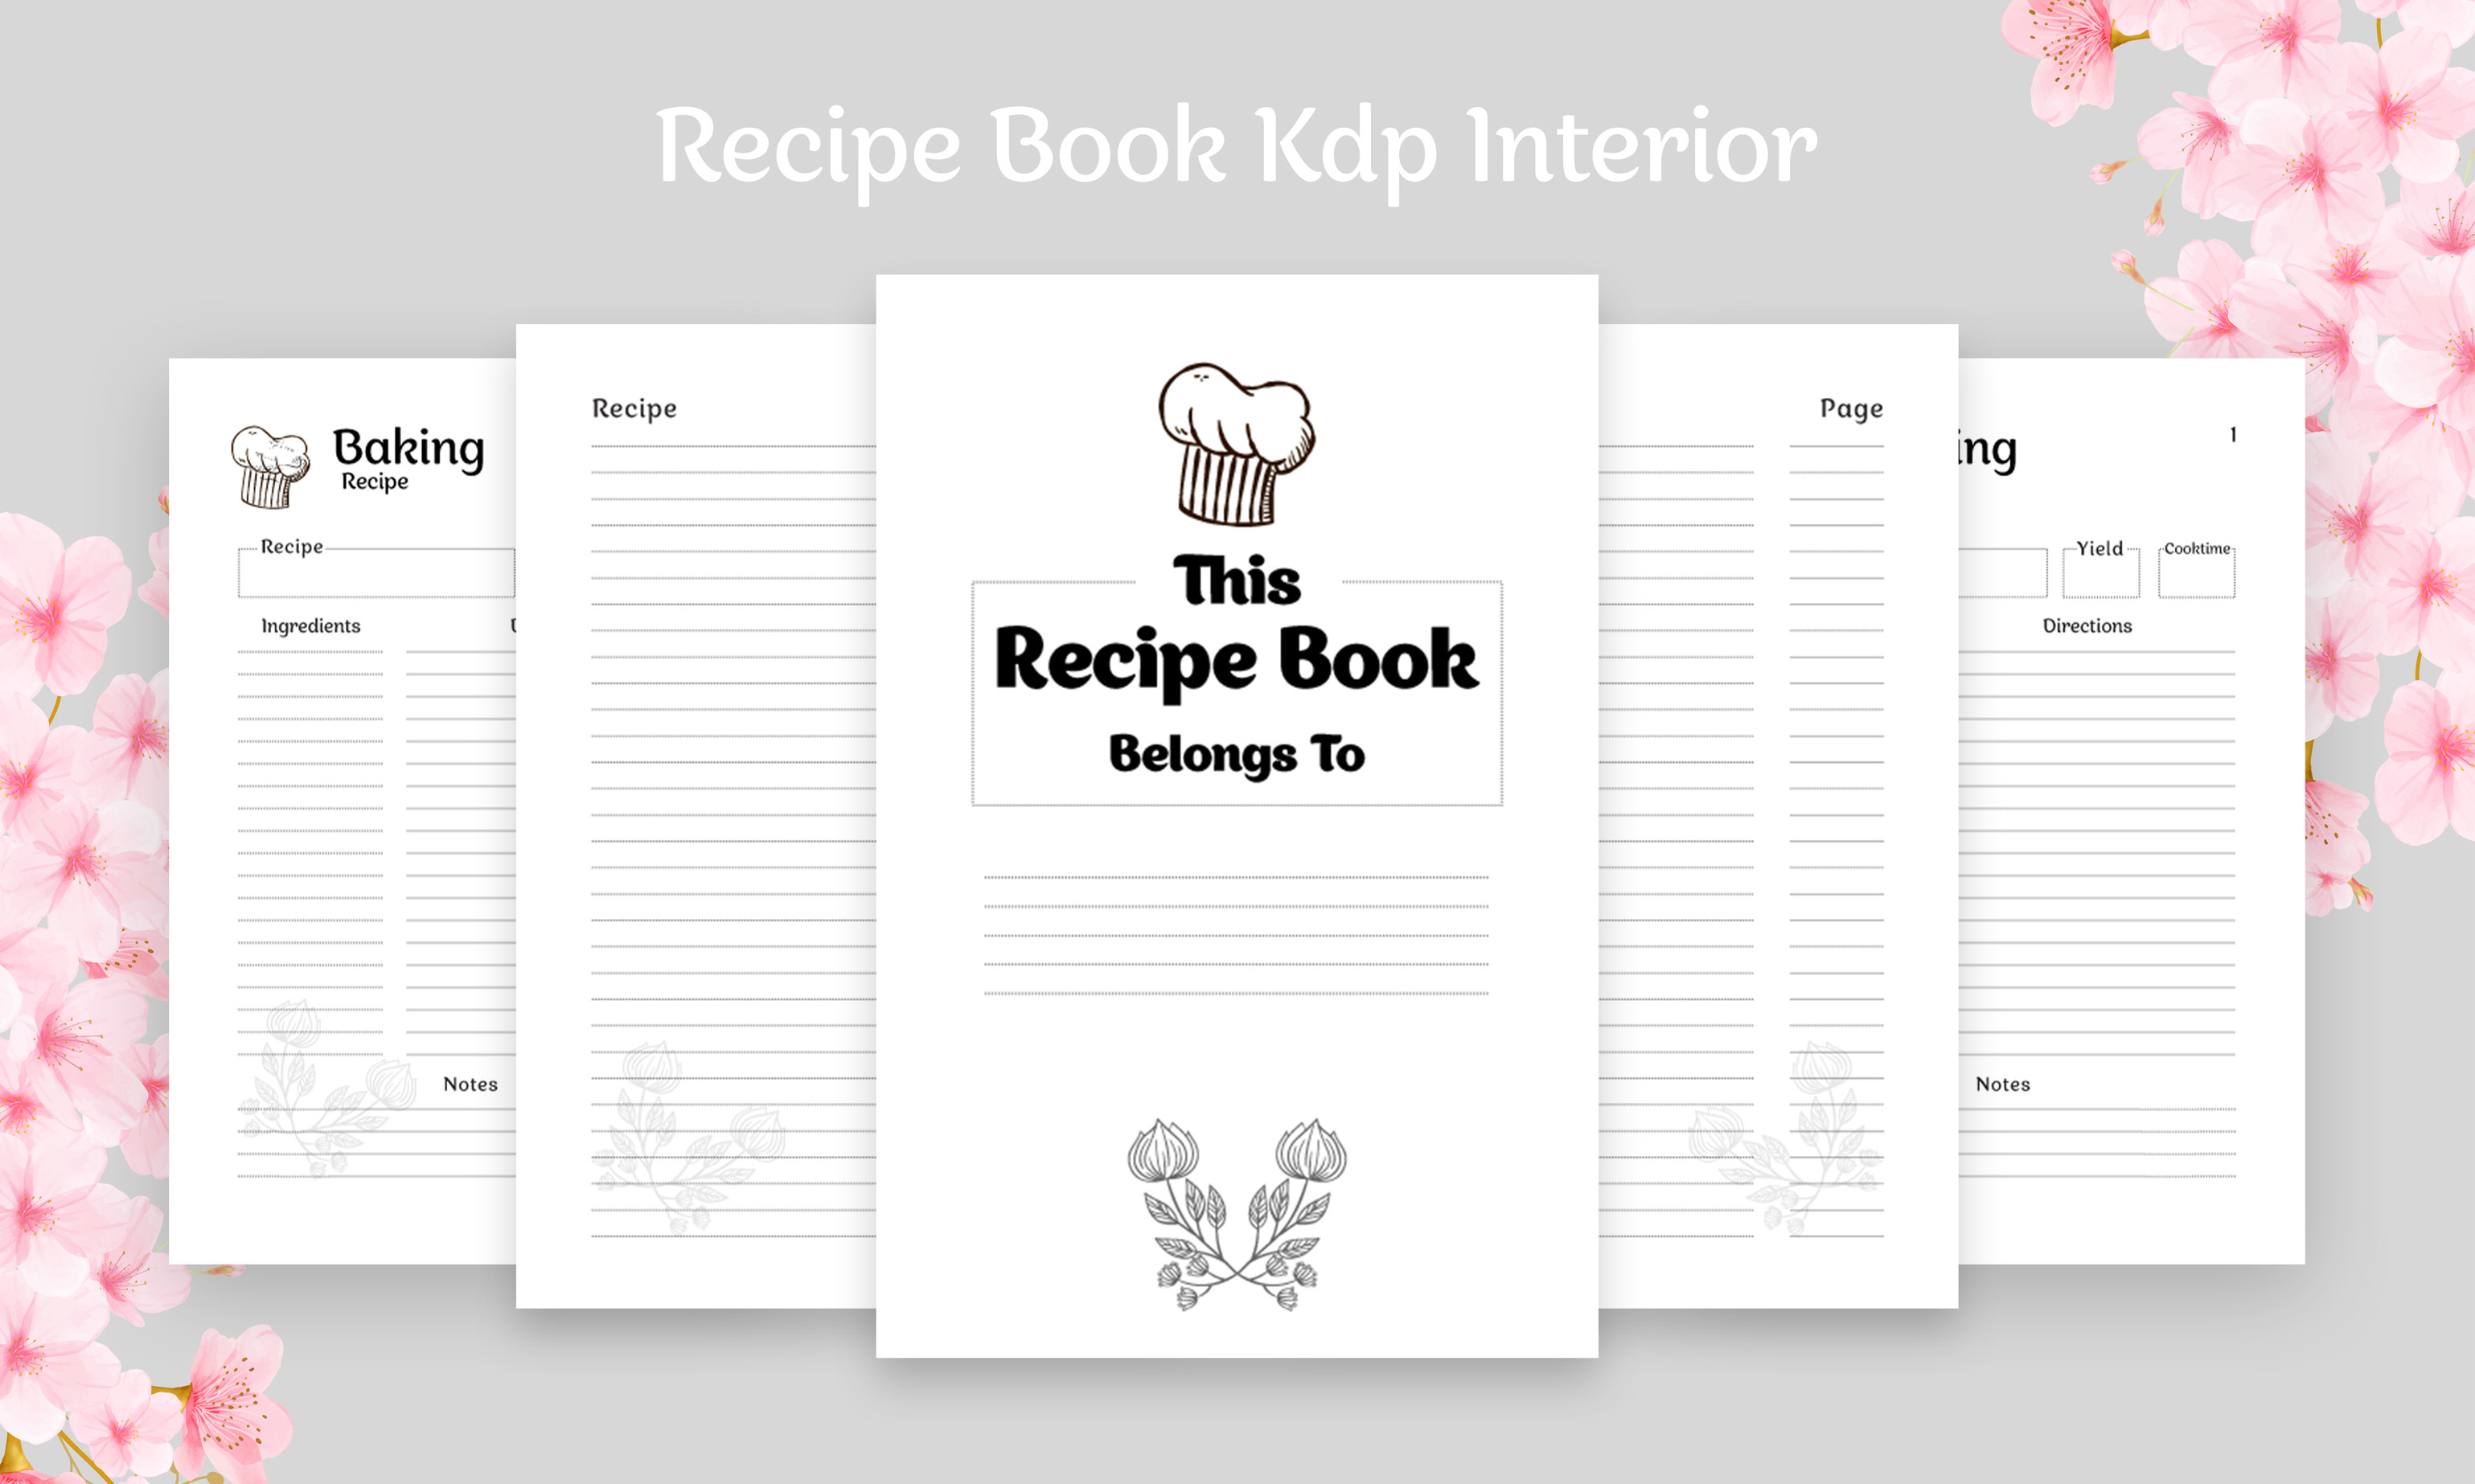 Blank Recipe Book Journal – KDP Interior Graphic by armanmojumdar49 ·  Creative Fabrica